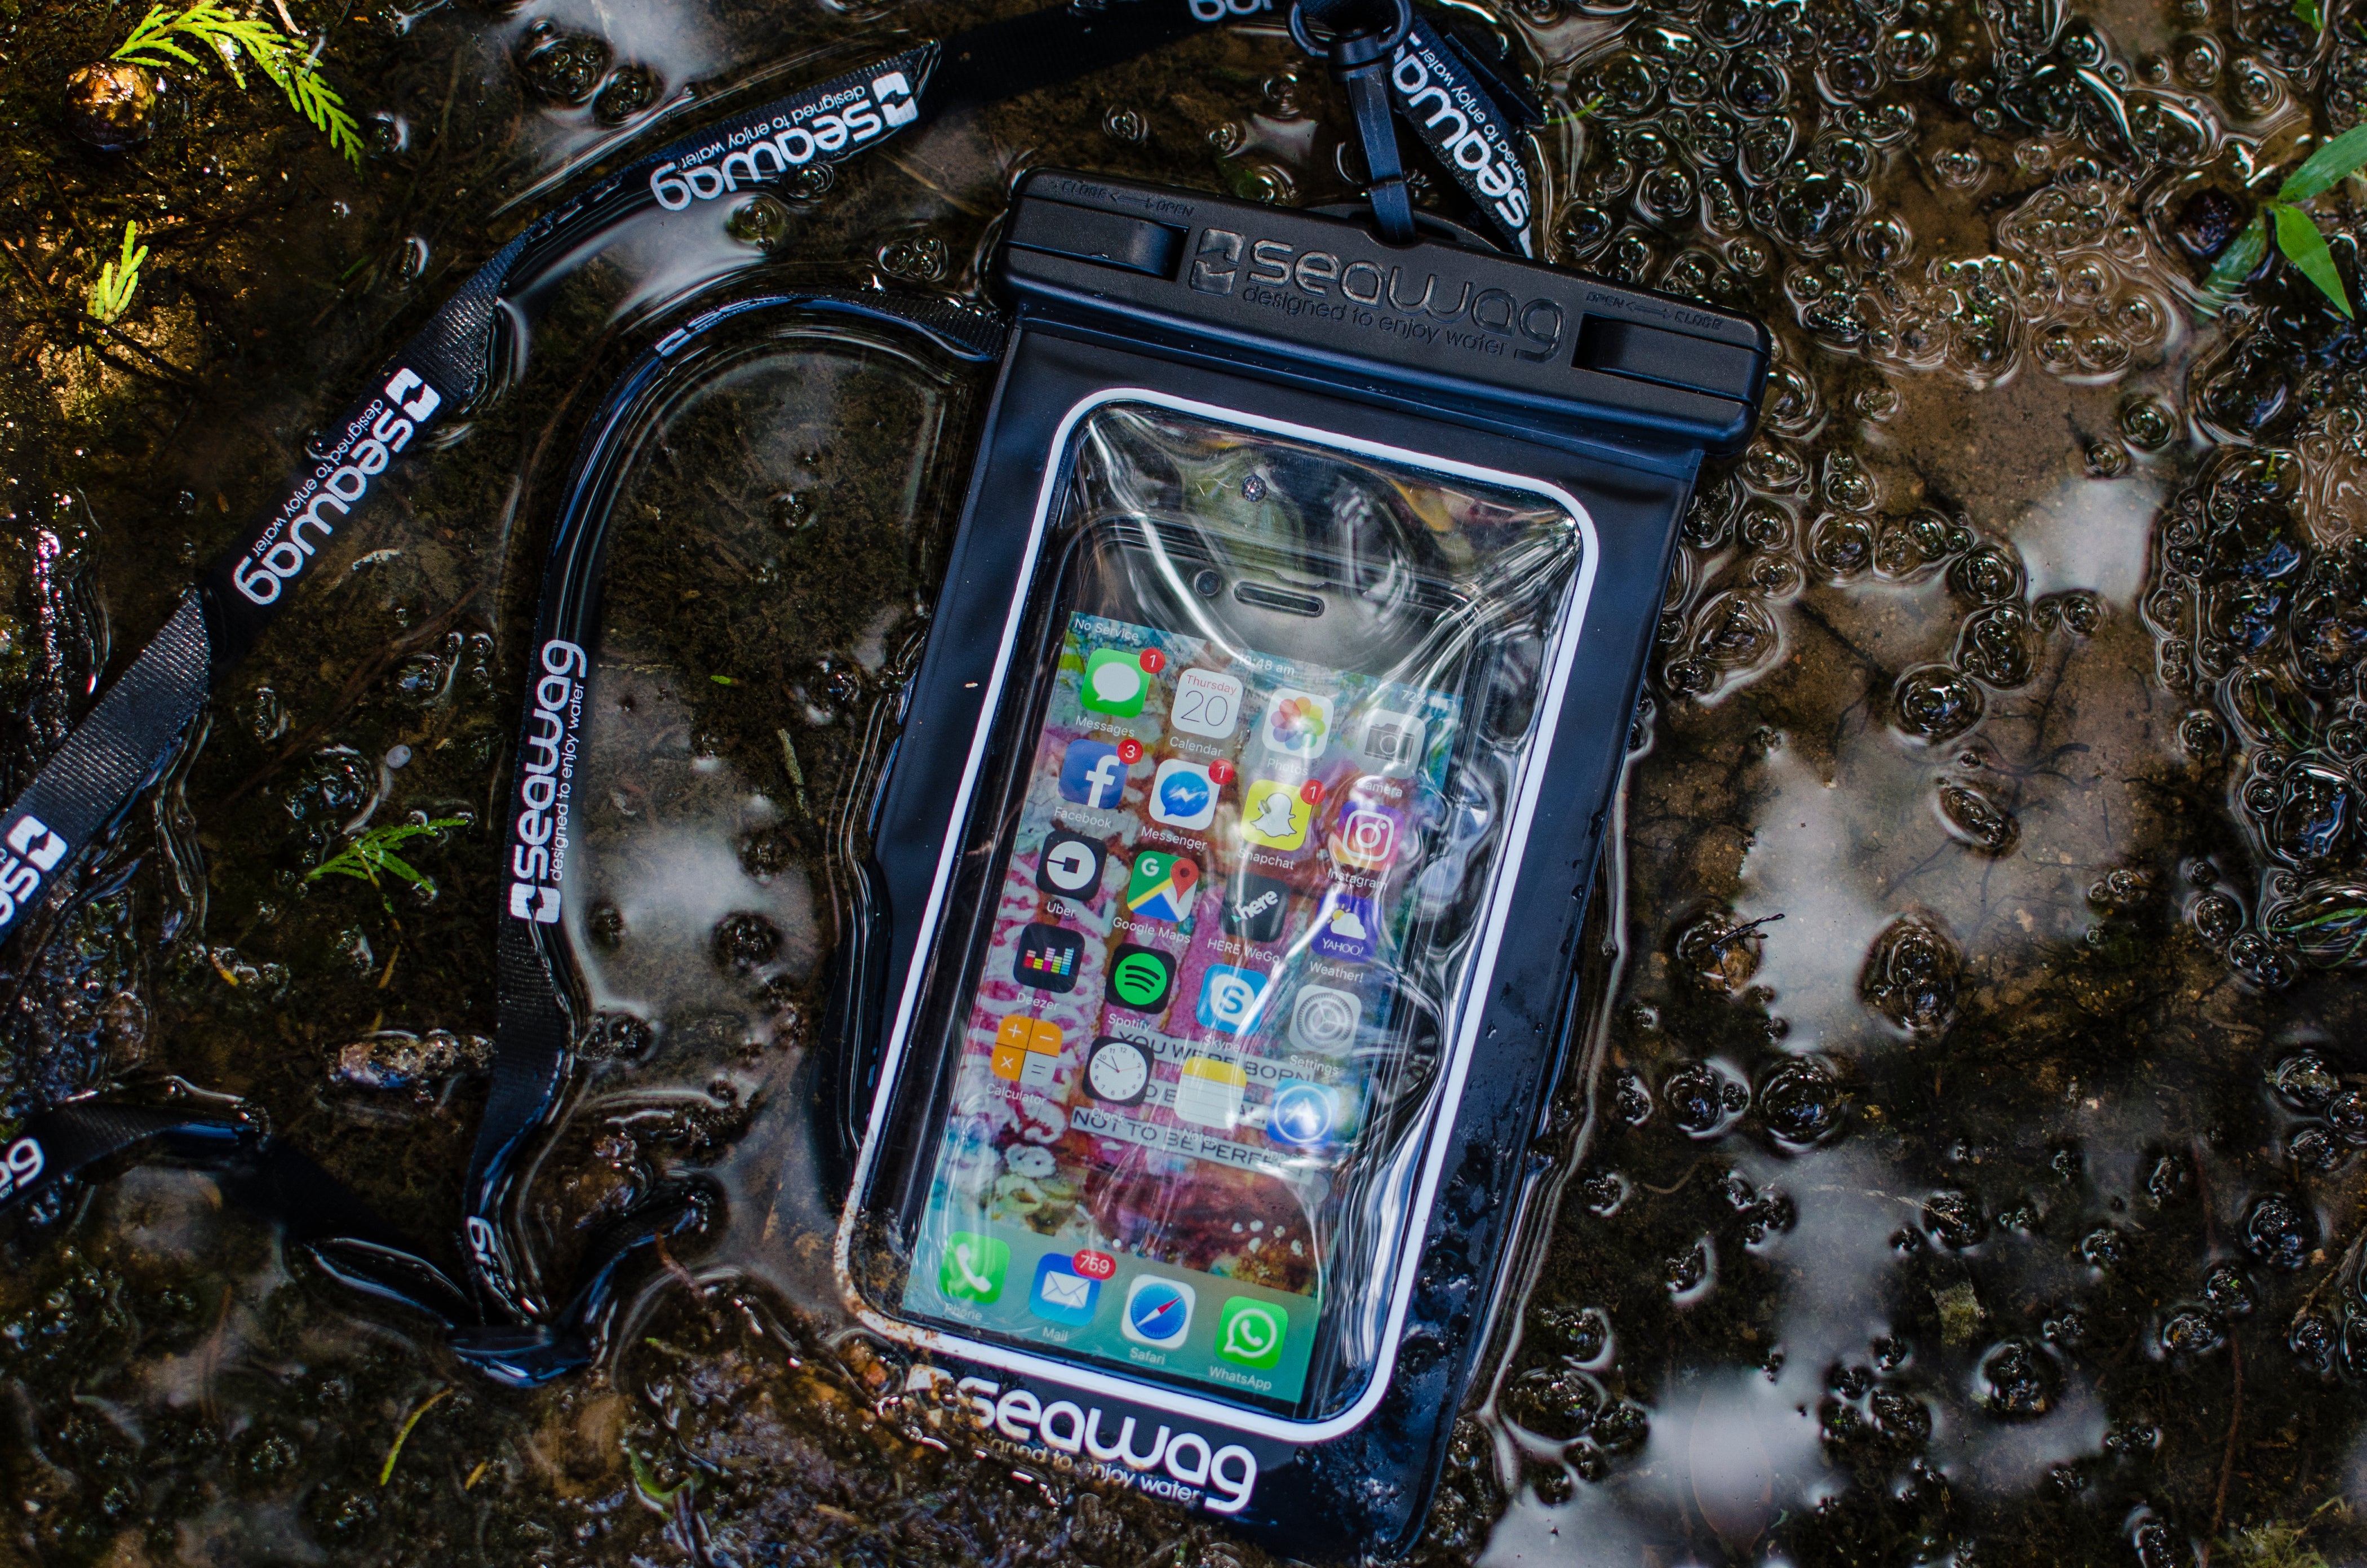 Universal Waterproof Case For Smartphone - Black/Pink